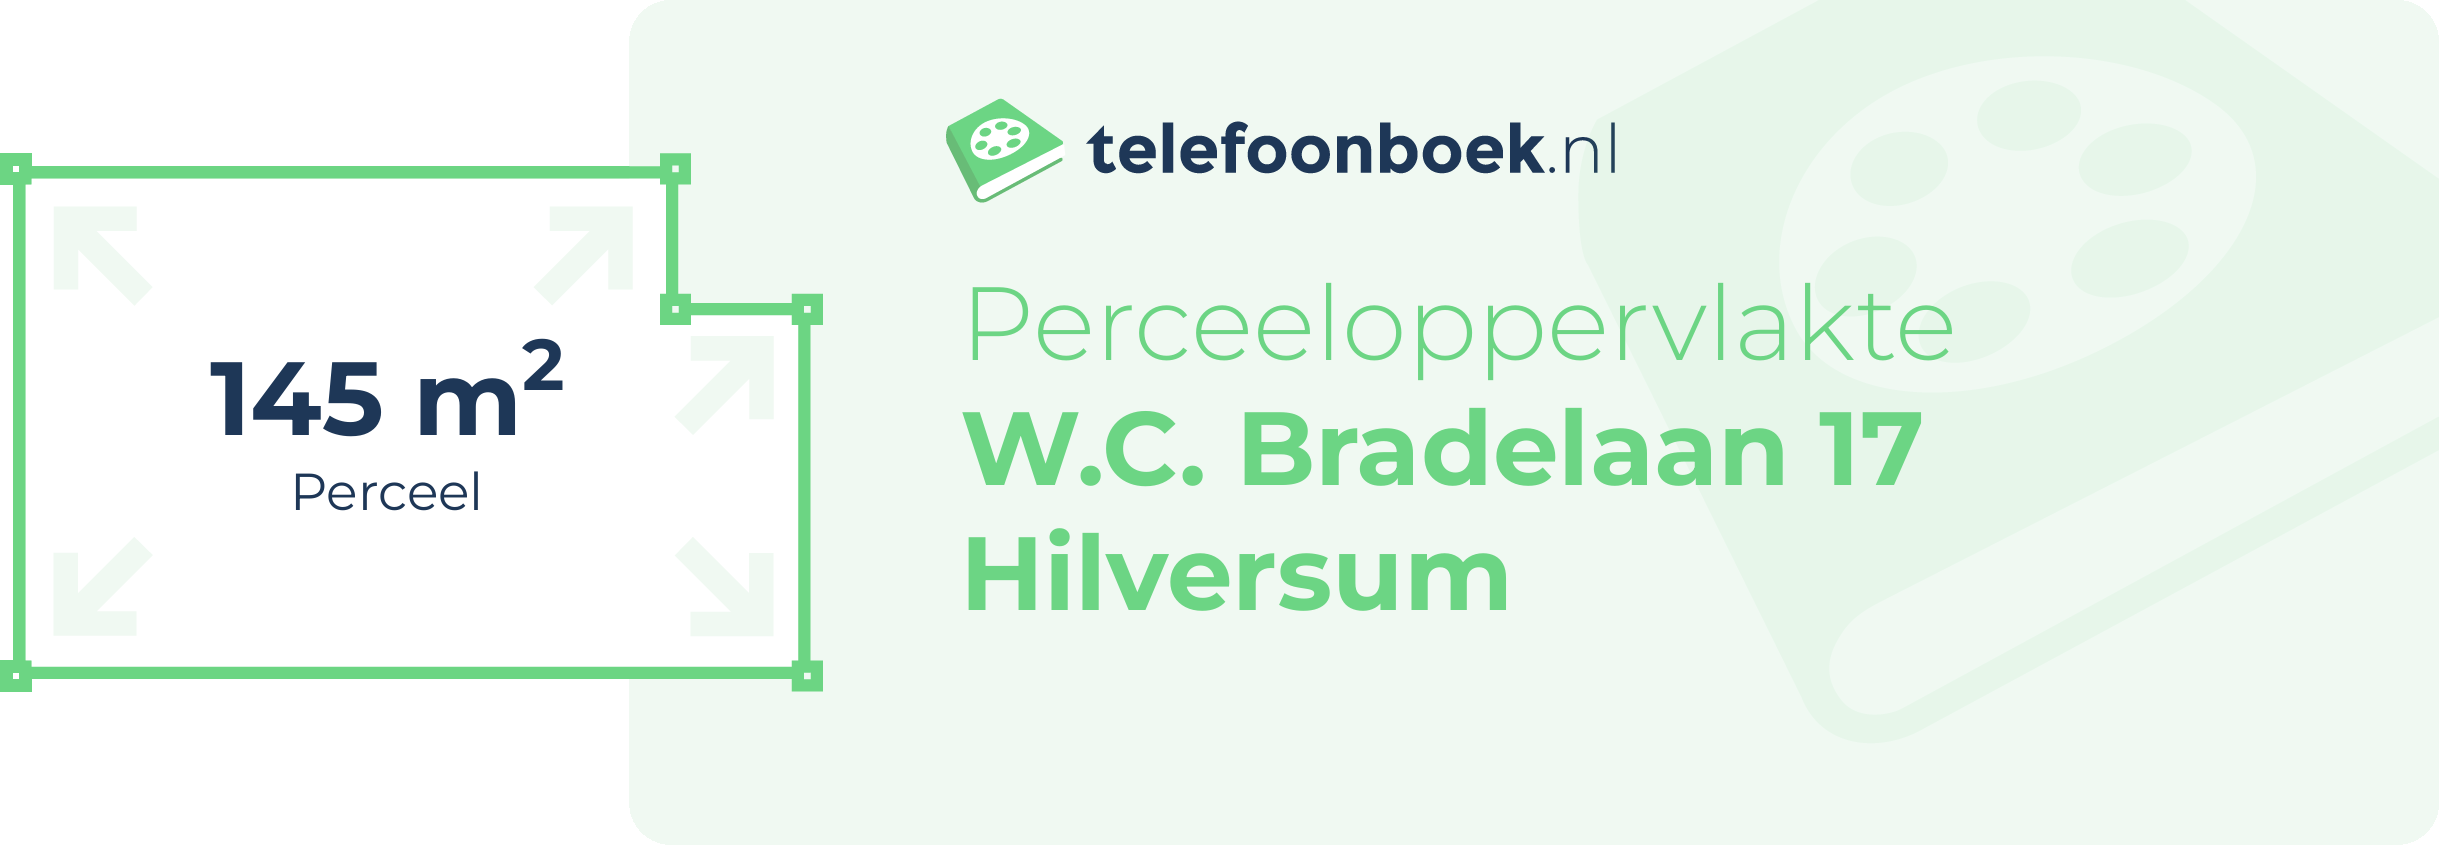 Perceeloppervlakte W.C. Bradelaan 17 Hilversum